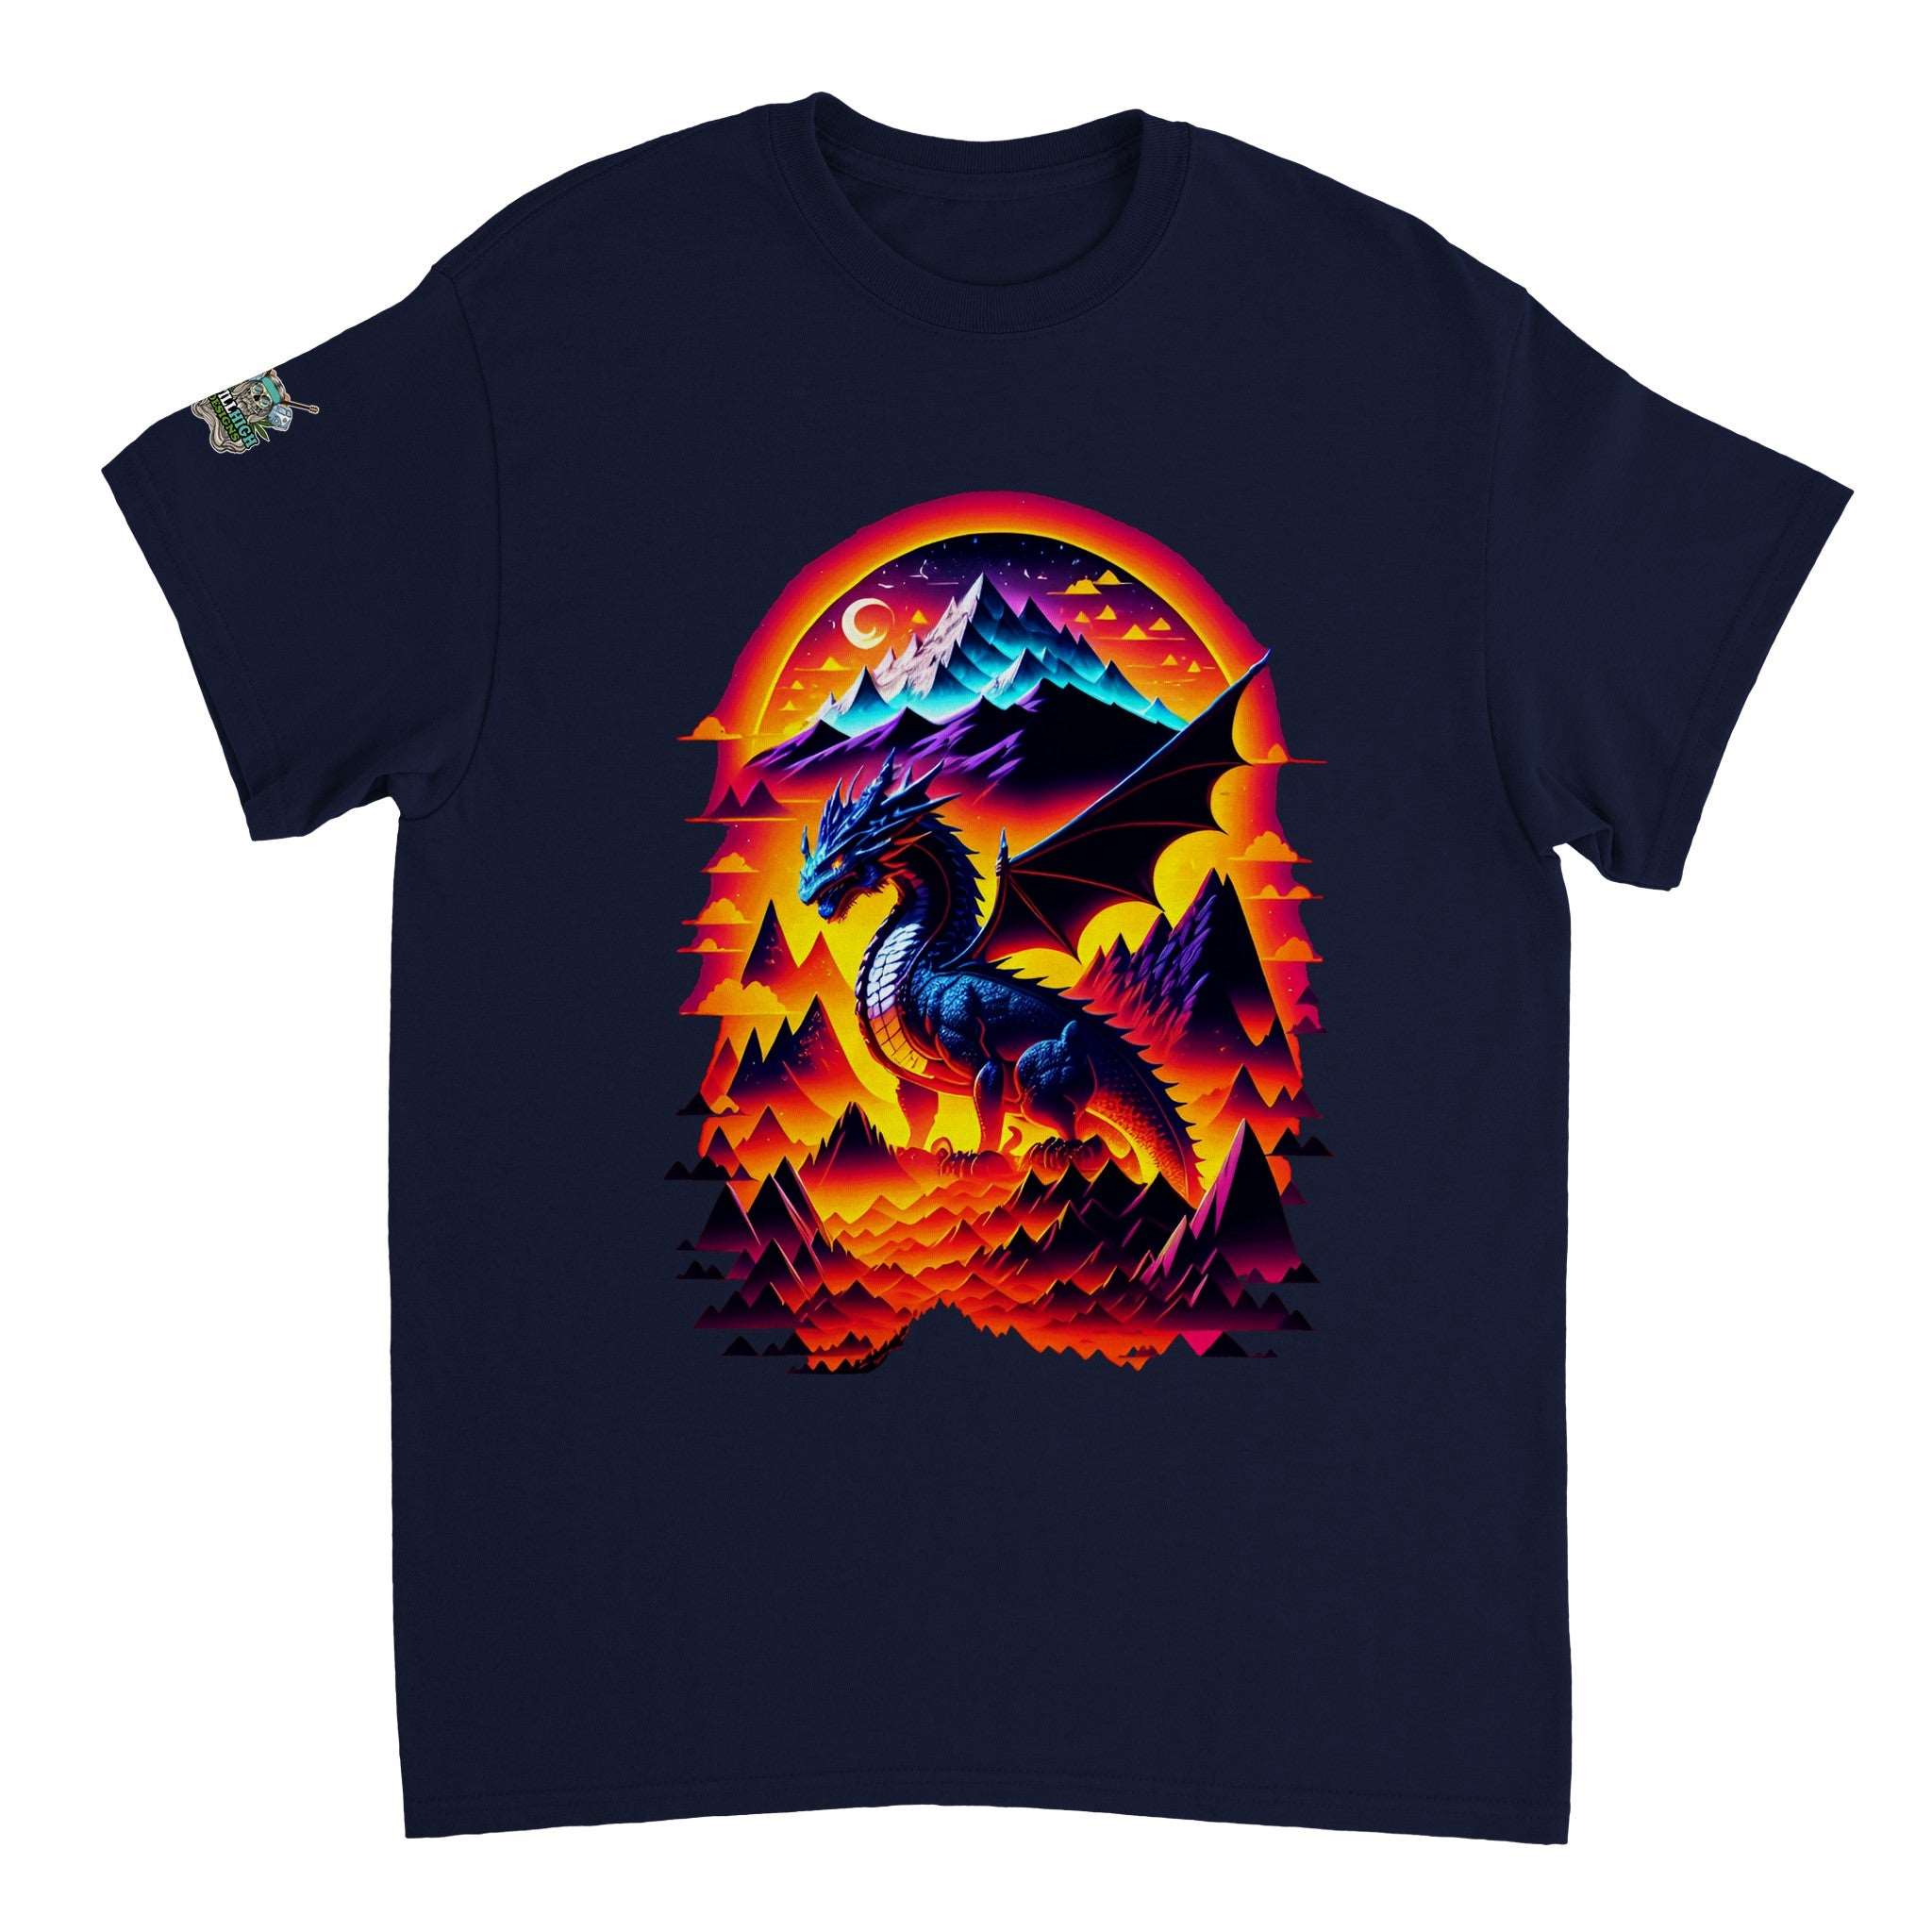  Mountain Dragon Graphic T-Shirt